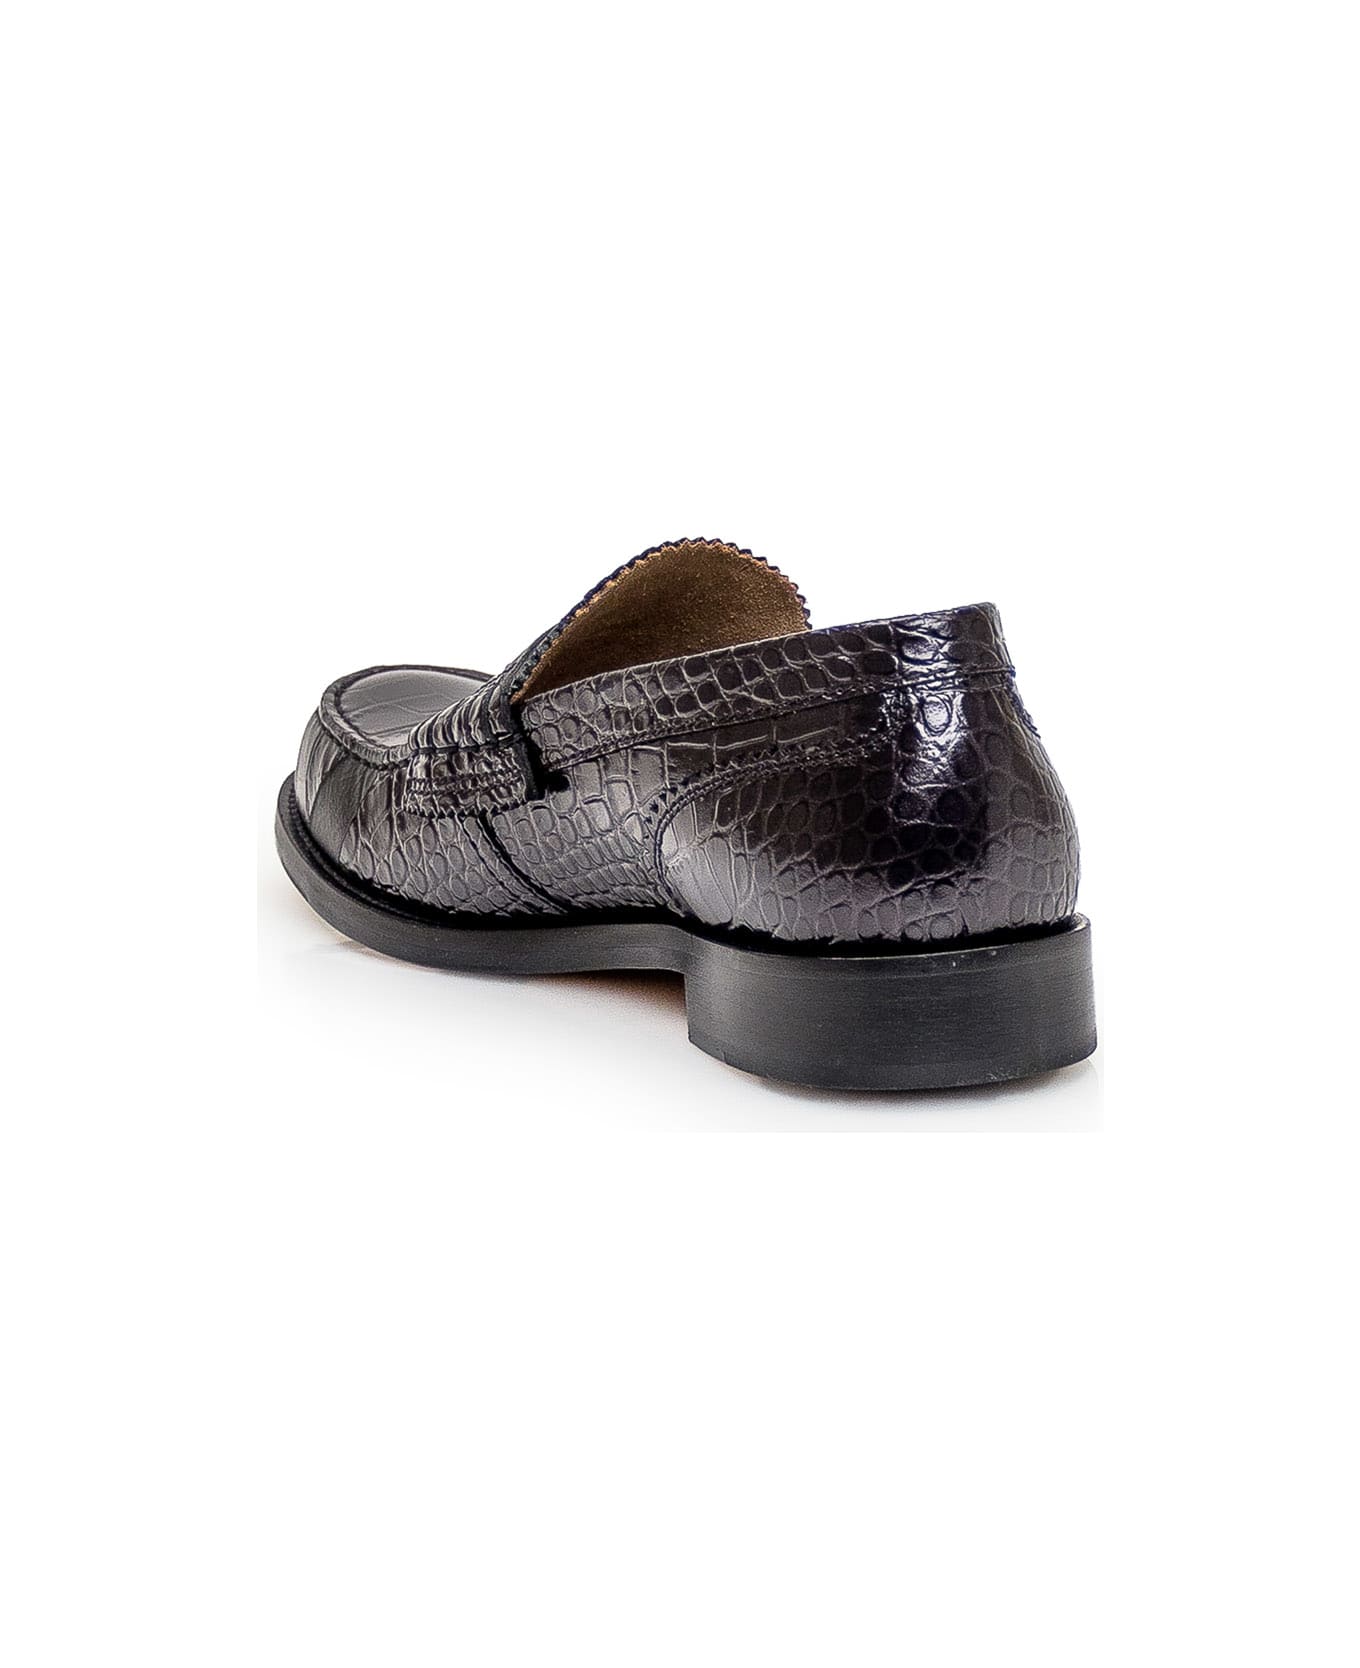 College Leather Loafer - NERO-BLACK